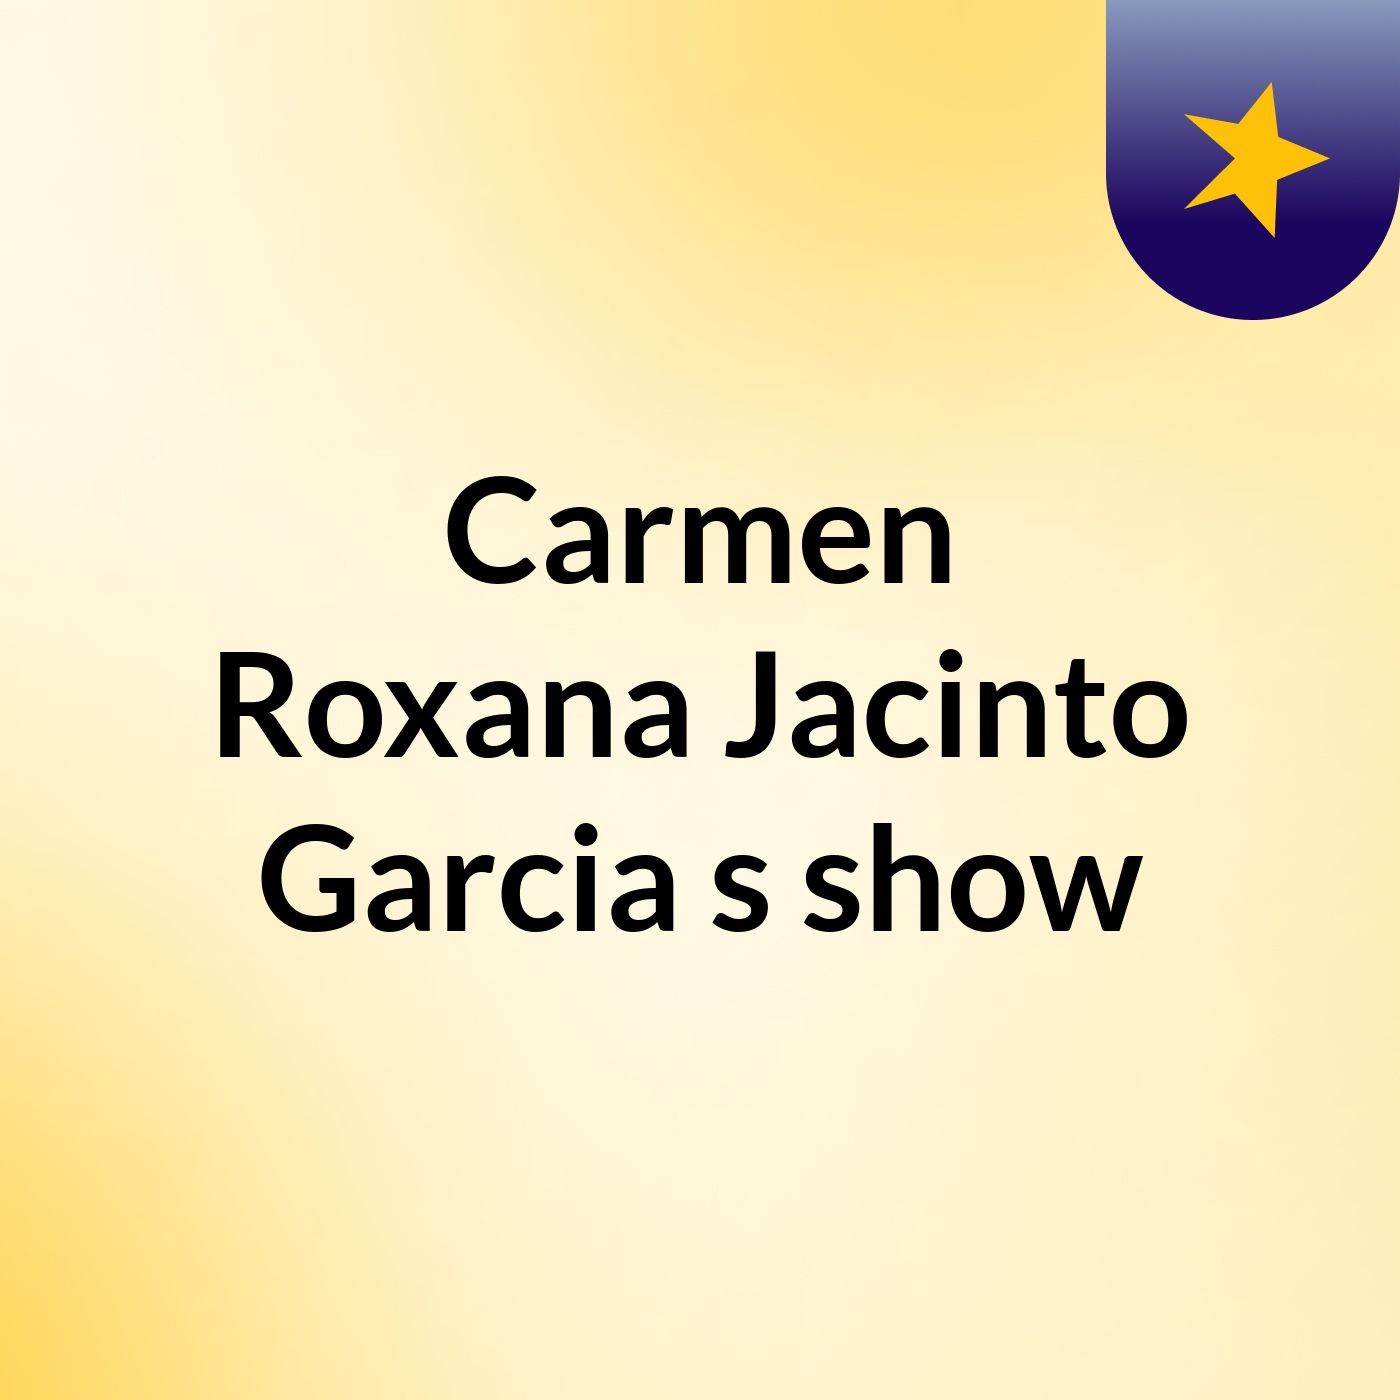 Carmen Roxana Jacinto Garcia's show